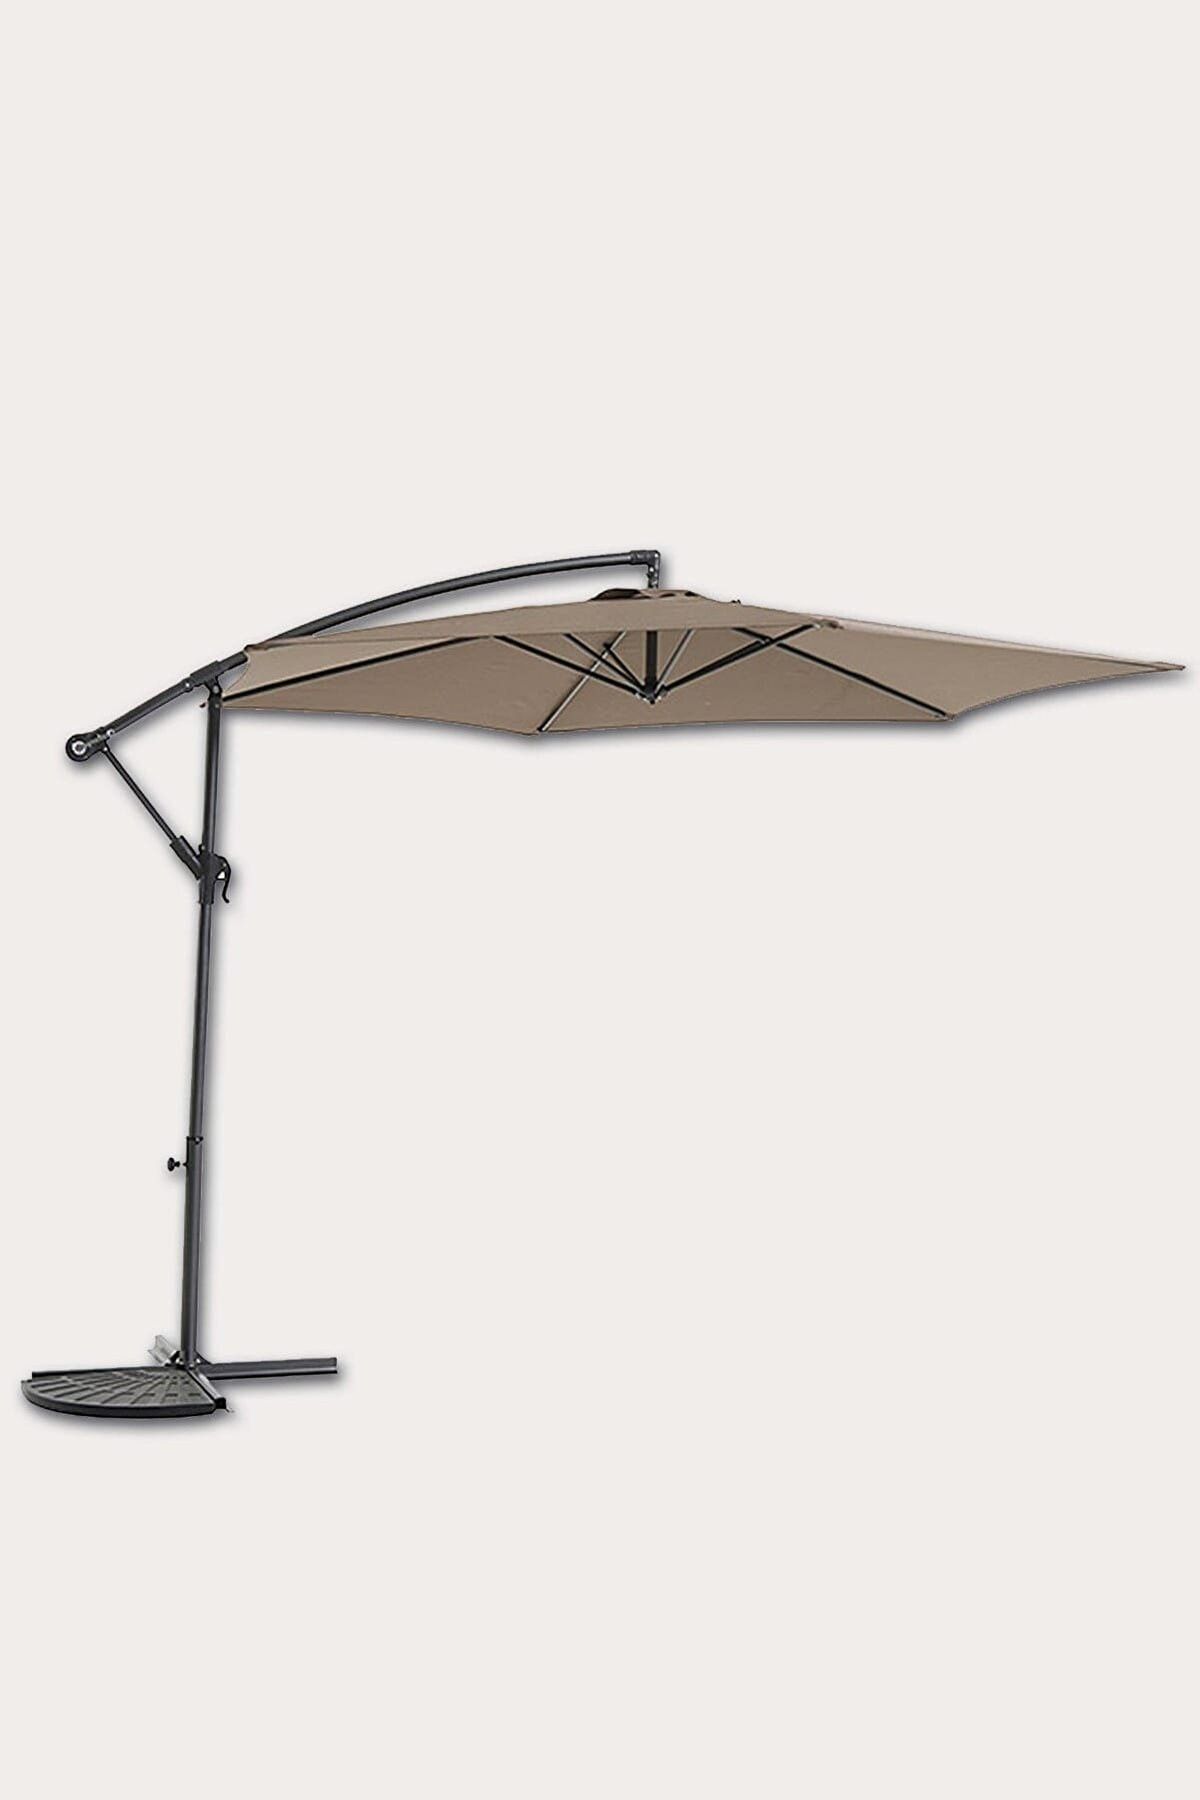 Bidesenal Makaralı Sistem Bahçe Şemsiyesi, Ampül Şemsiye, 300cm Polyester Bahçe Şemsiyesi Aş04